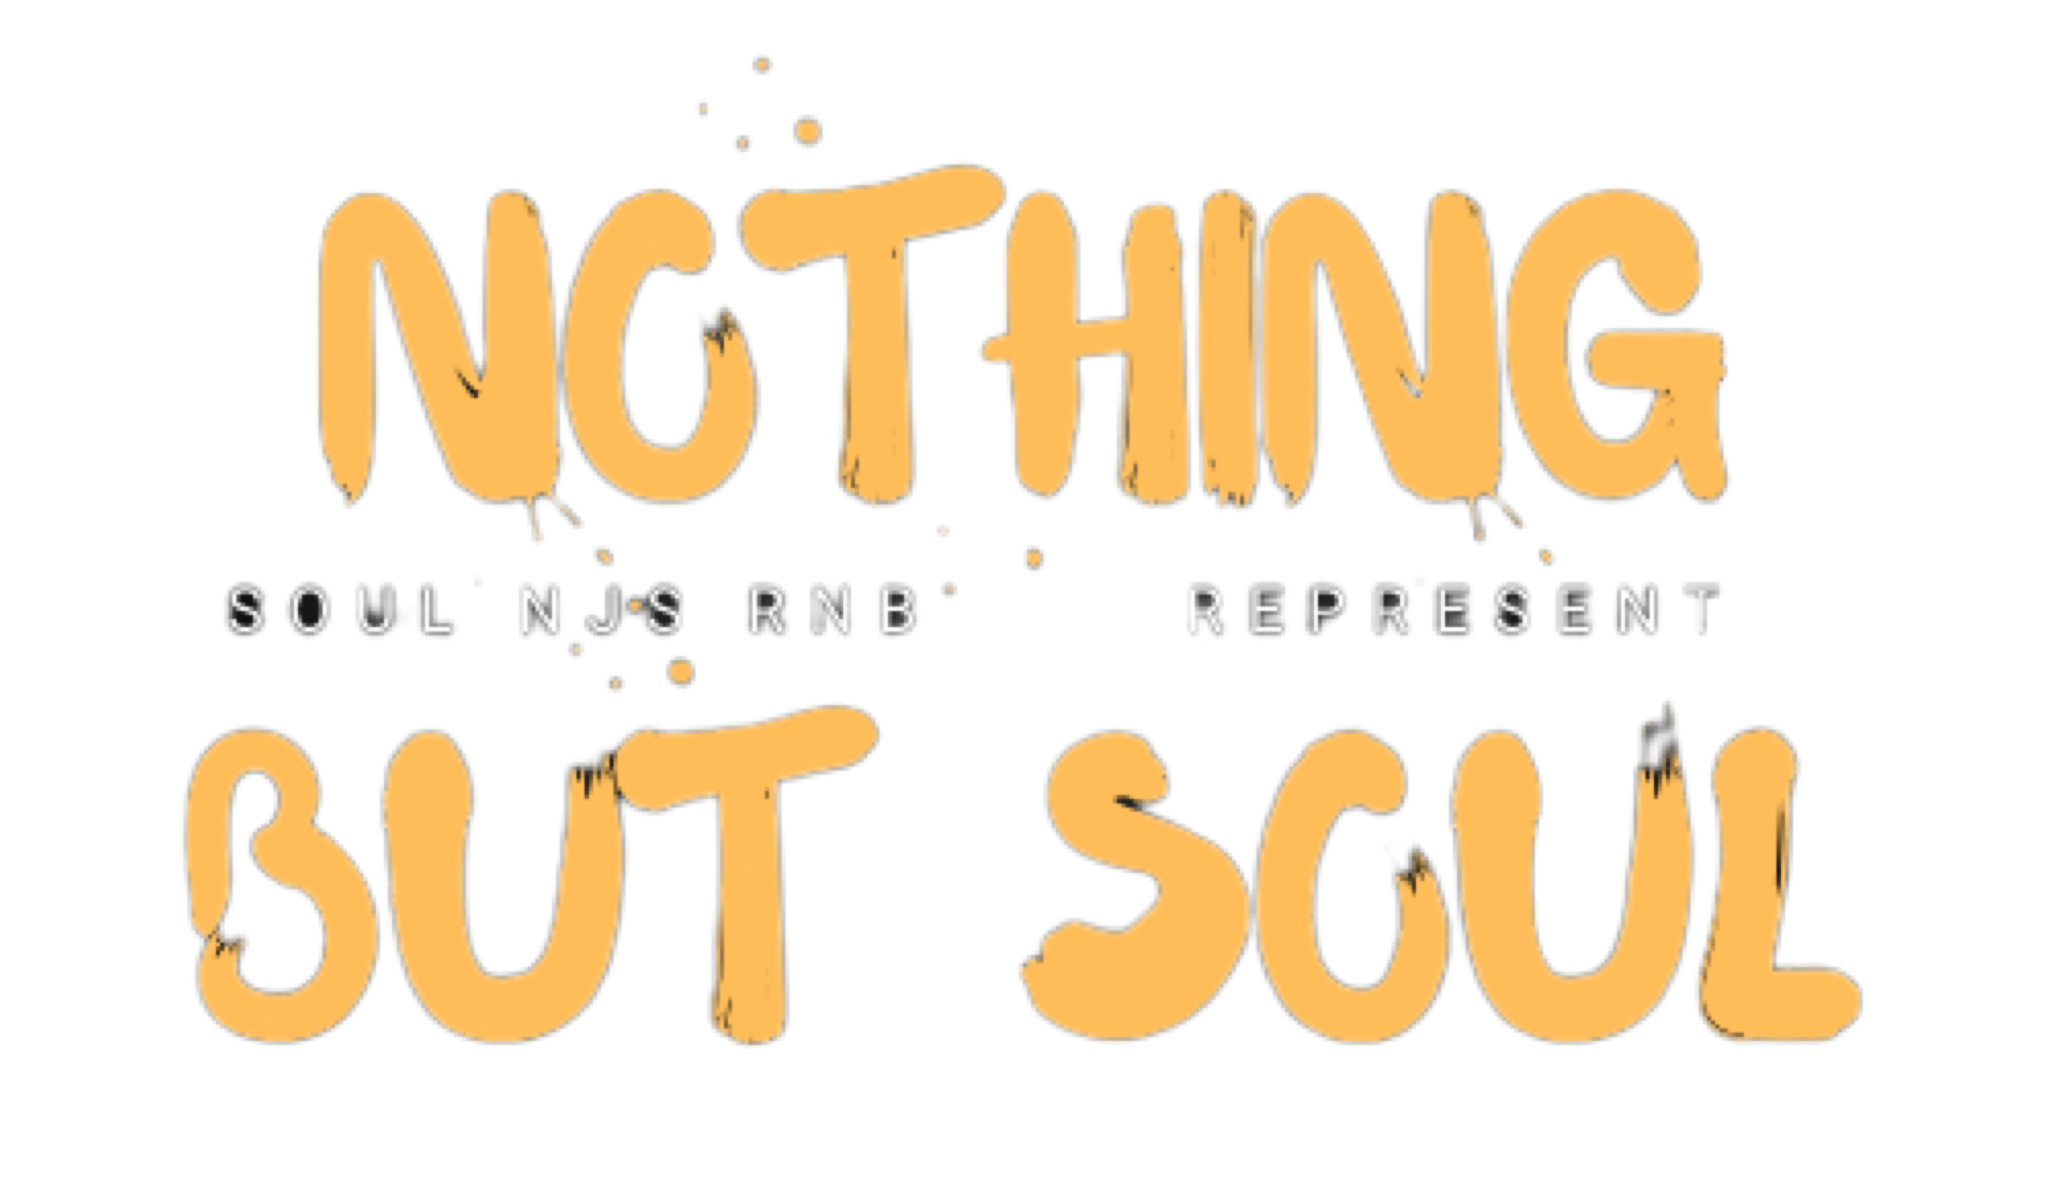 NothingButSoul.com